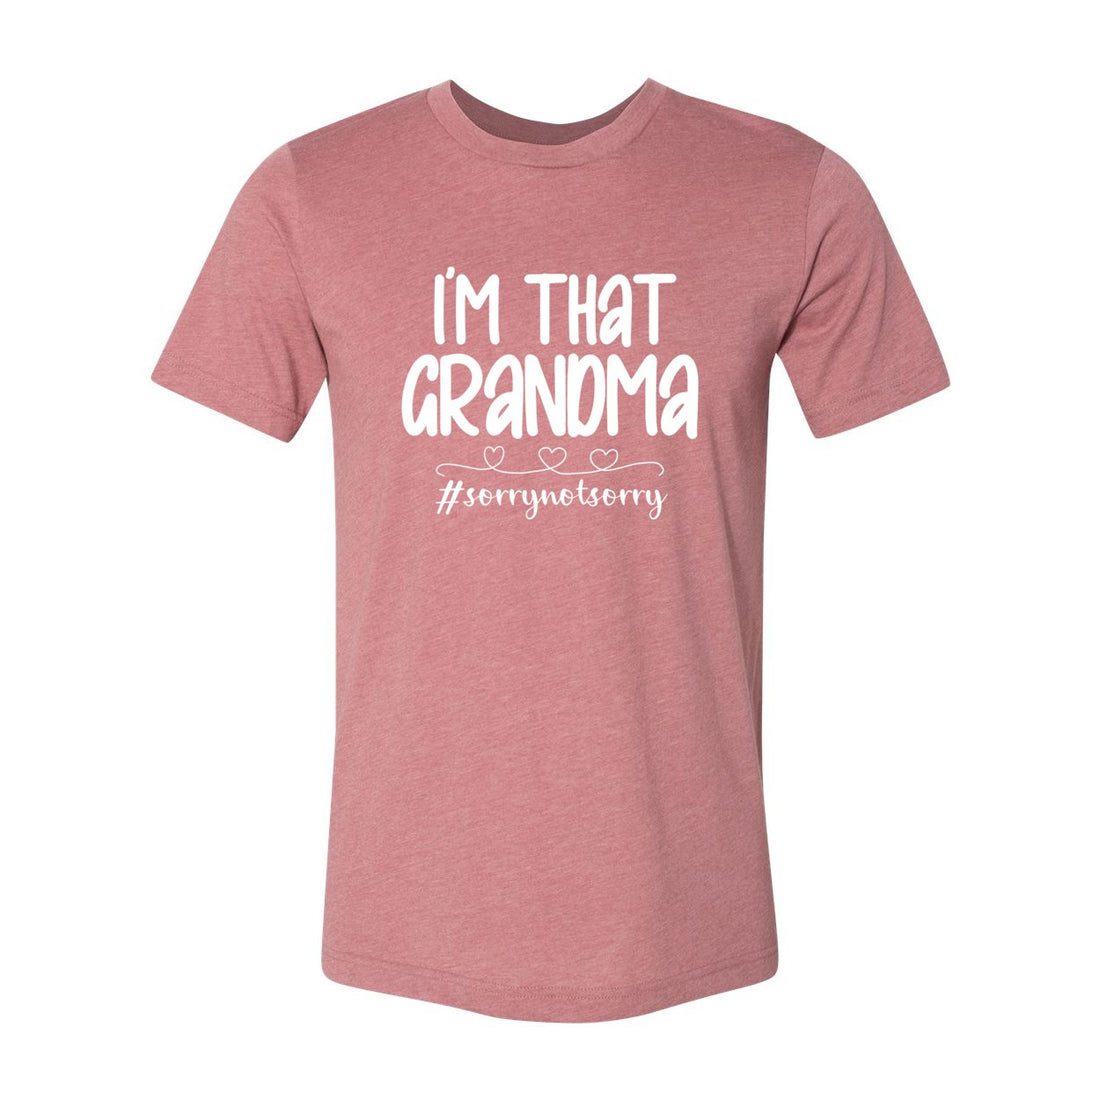 I'm That Grandma Short Sleeve Jersey Tee - T-Shirts - Positively Sassy - I'm That Grandma Short Sleeve Jersey Tee